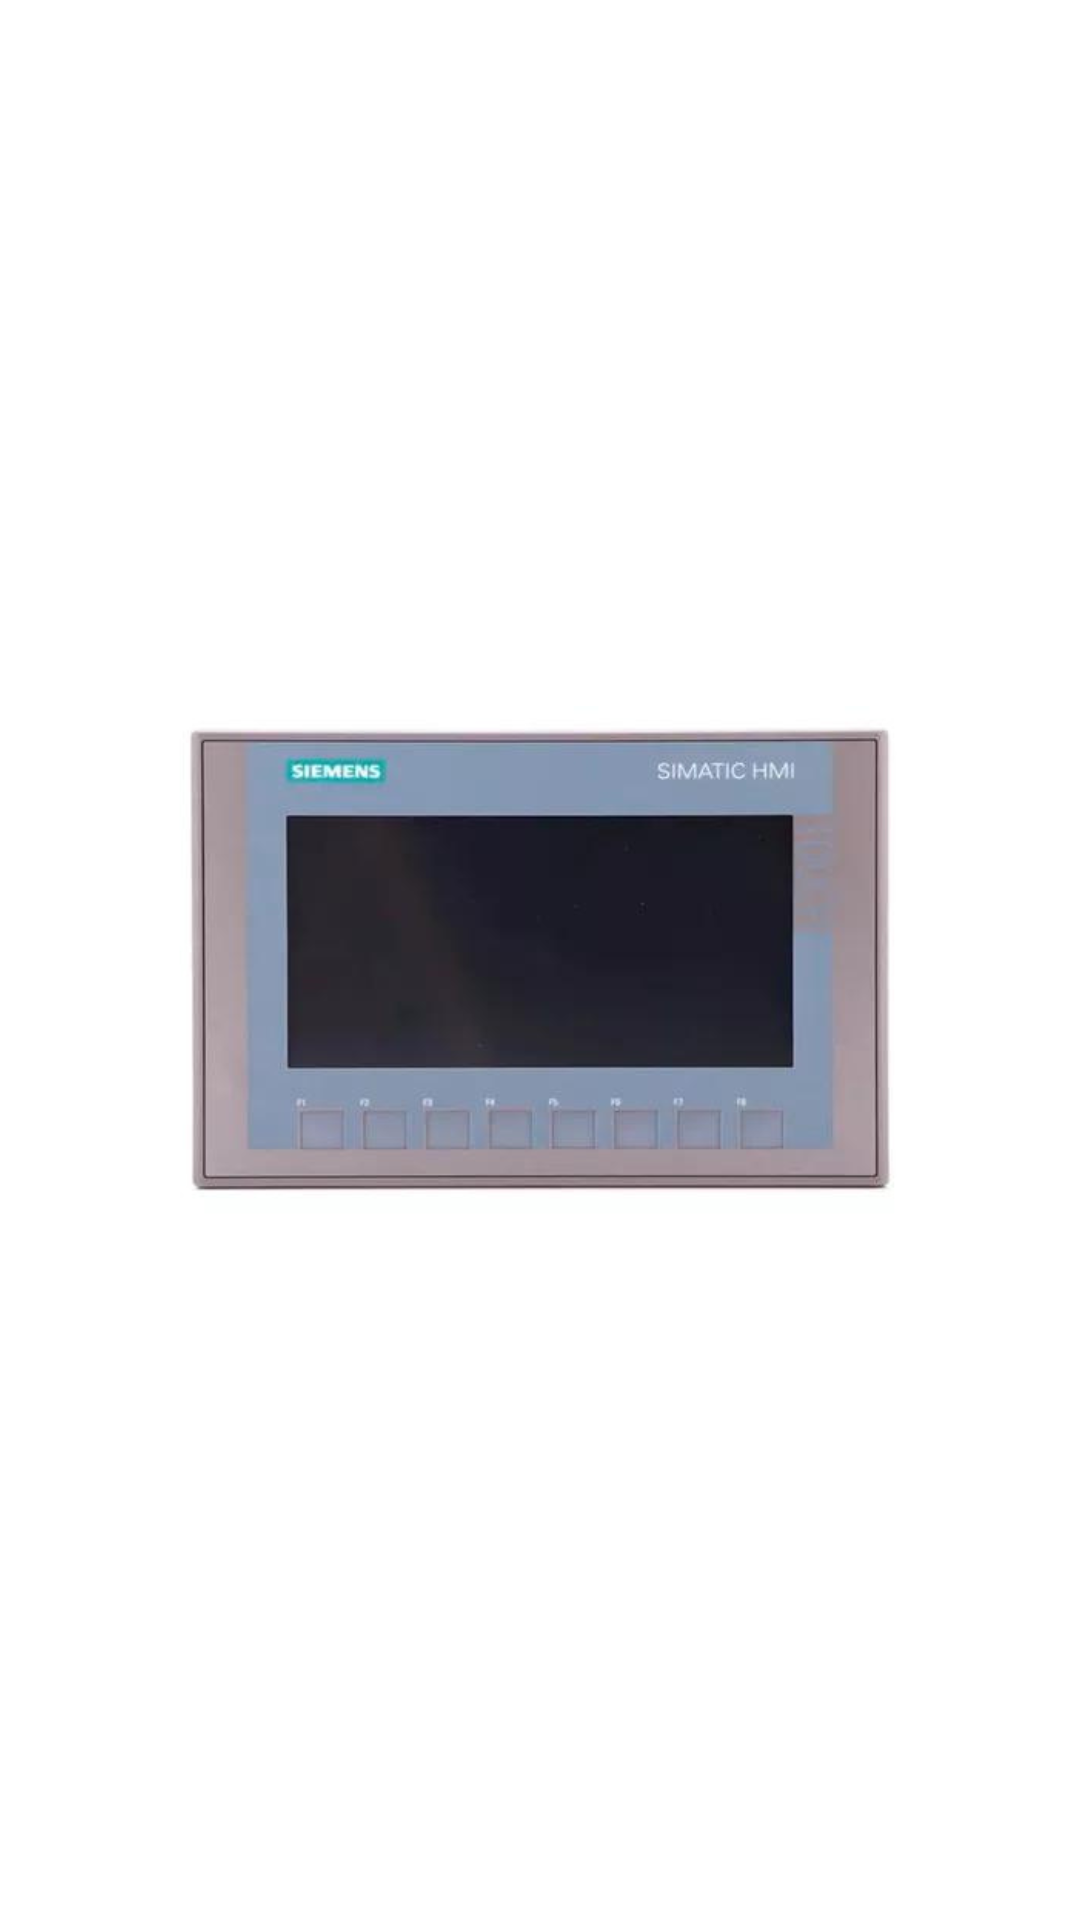 6AV2123-2GA03-0AX0 Siemens SIMATIC HMI, KTP700 Basic DP, Basic Panel, Key/touch operation, 7" TFT display, 65536 colors, PROFIBUS interface